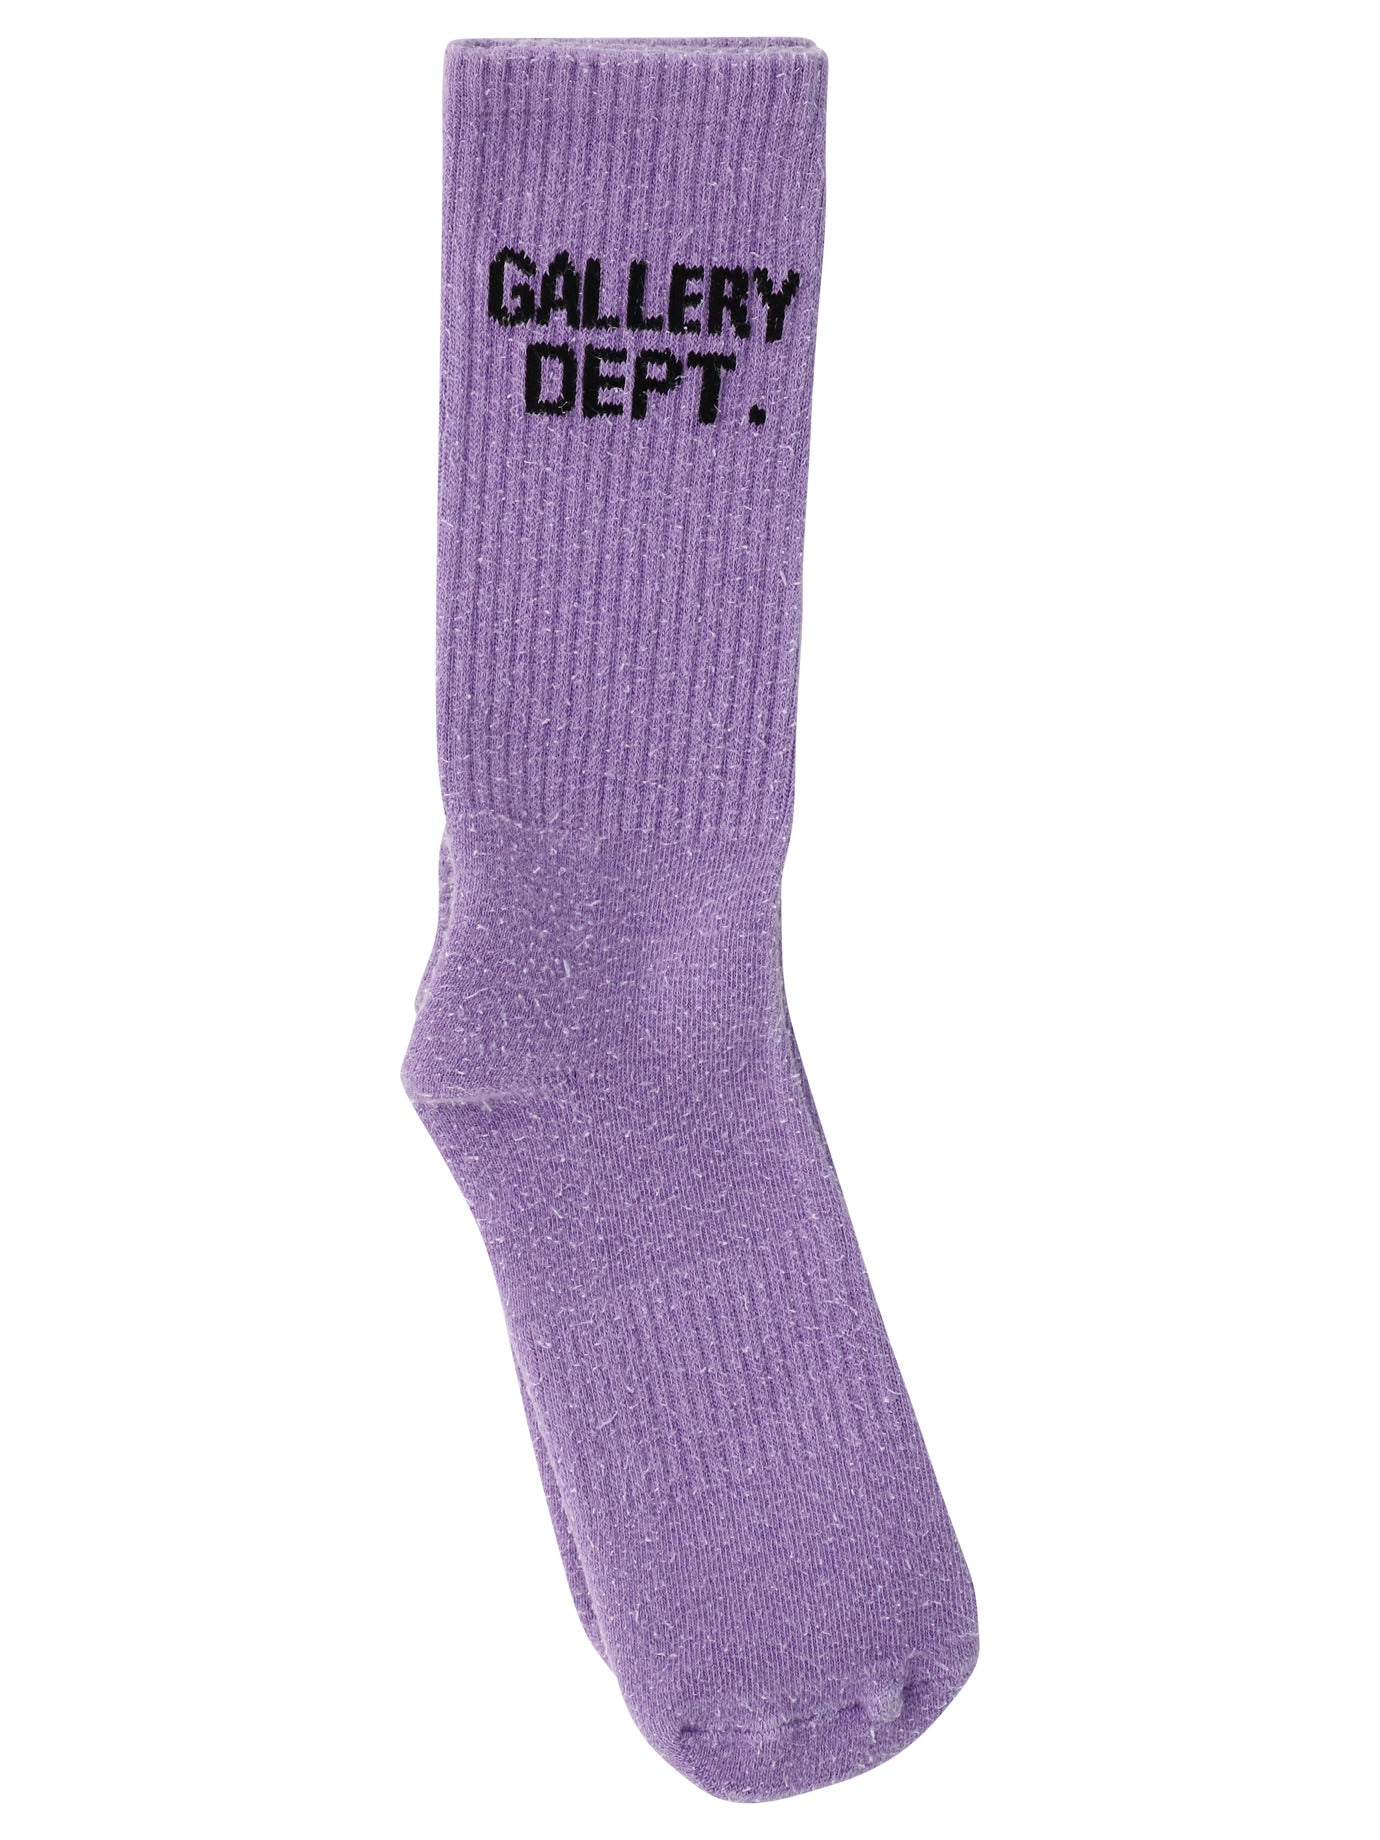 Shop Gallery Dept. Crew Socks Purple